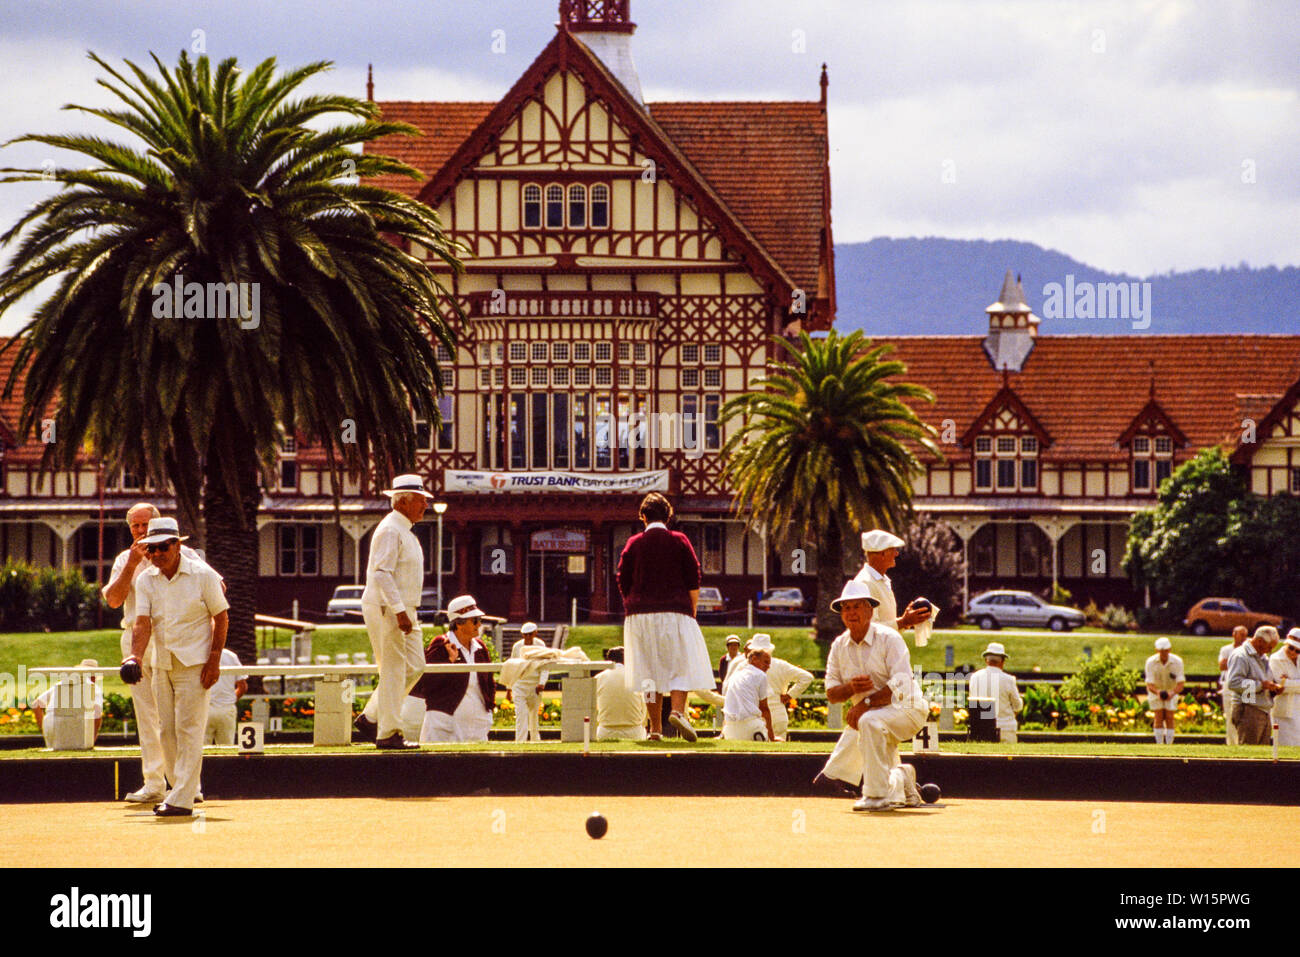 New Zealand, North Island, Rotorua. Elderly players at Rotorua bowling club. Lawn bowls. Photo taken November 1989. Photo: © Simon Grosset. Archive: I Stock Photo